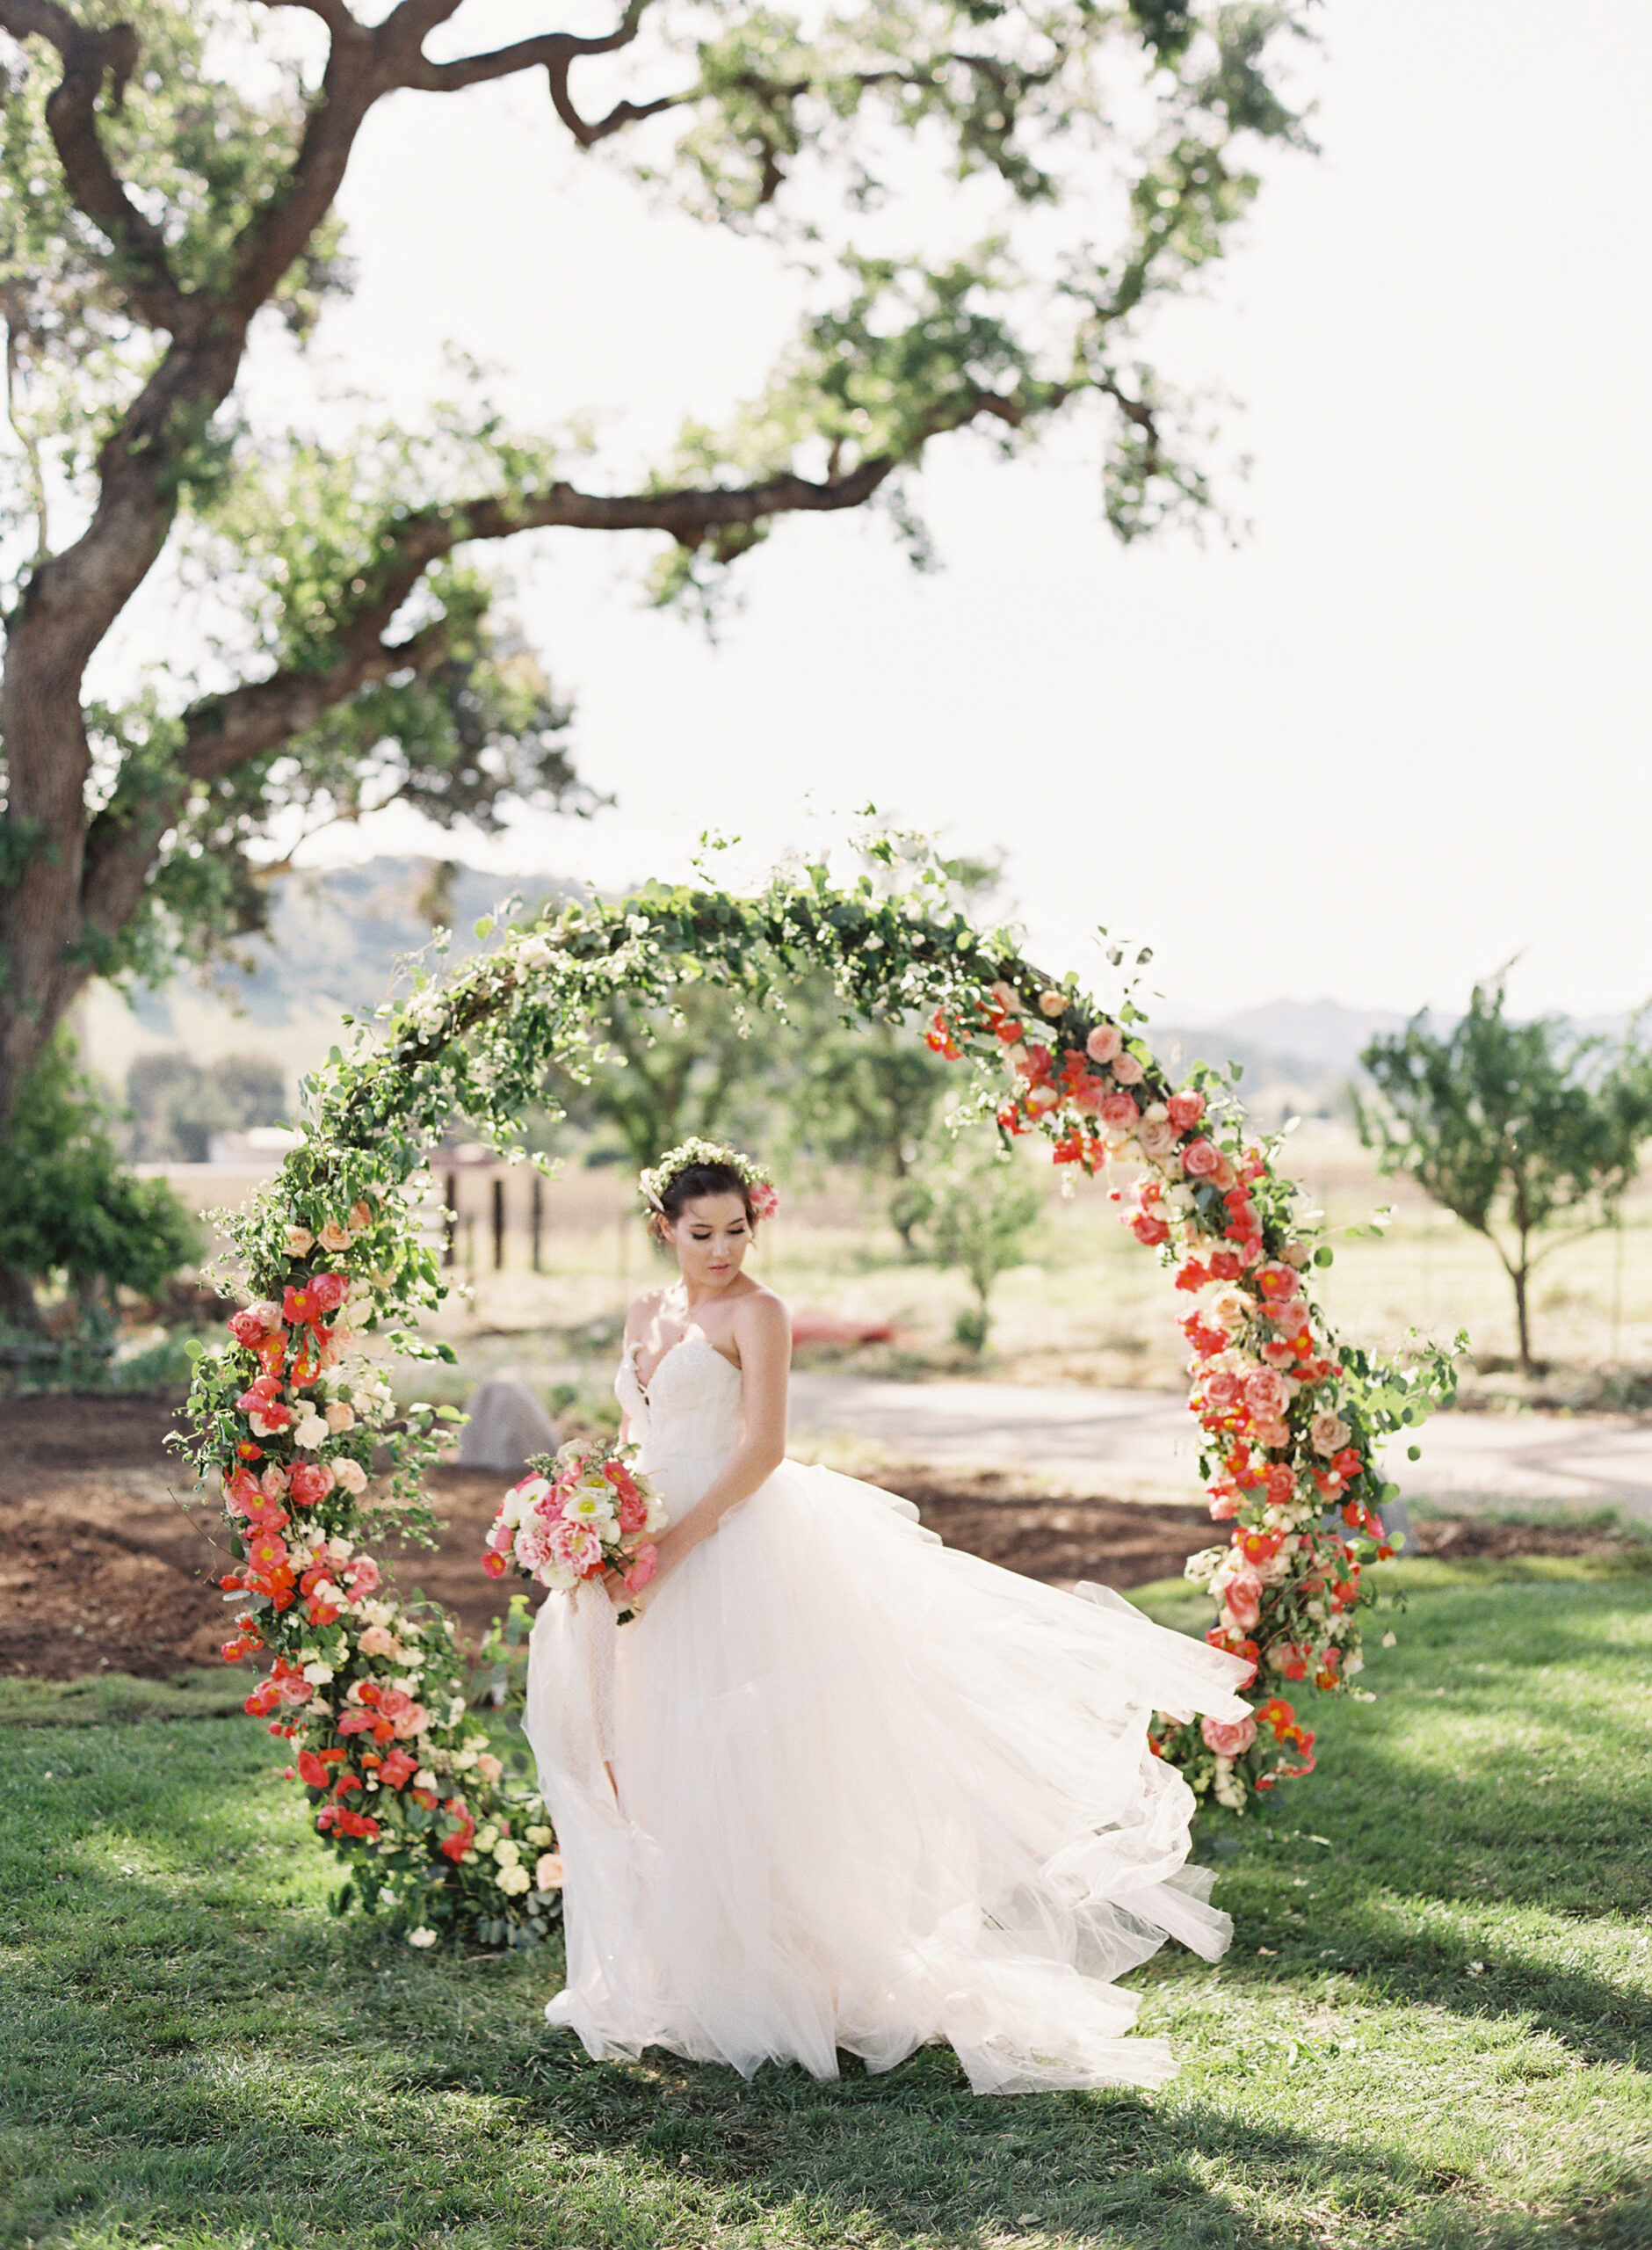 Wedding Ceremony Floral Arch Ideas